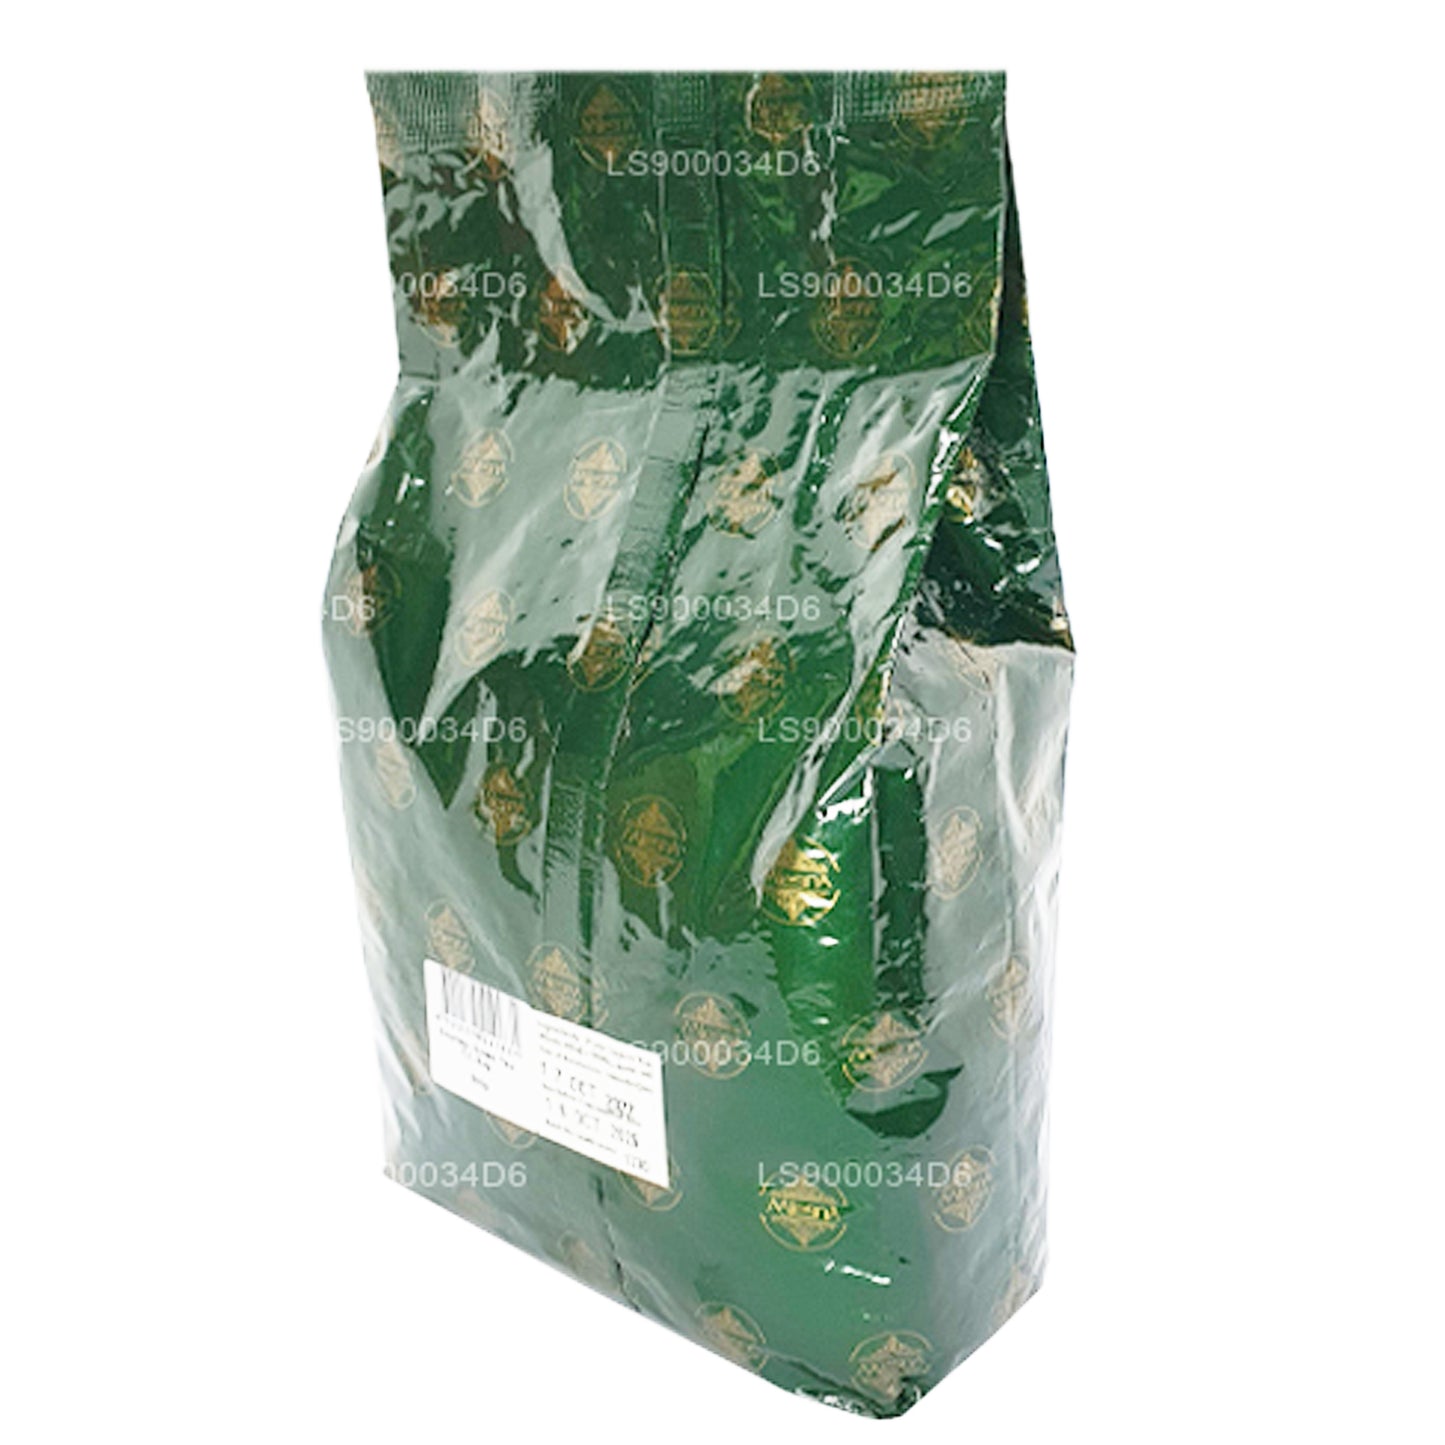 Mlesna Natural Flavored Soursop Ceylon Green Tea (500g)